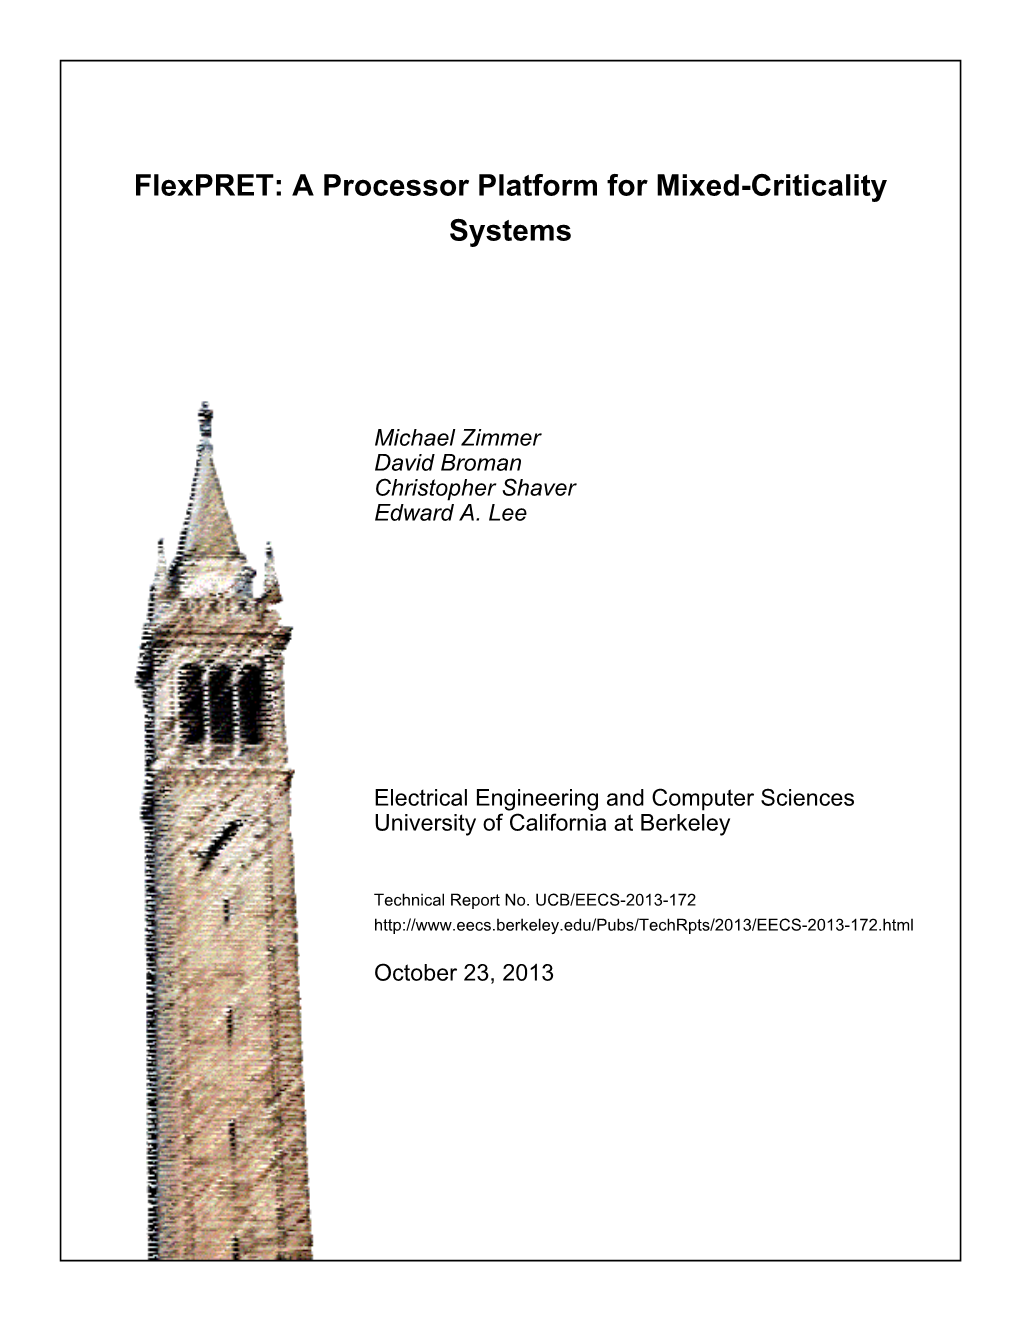 Flexpret: a Processor Platform for Mixed-Criticality Systems